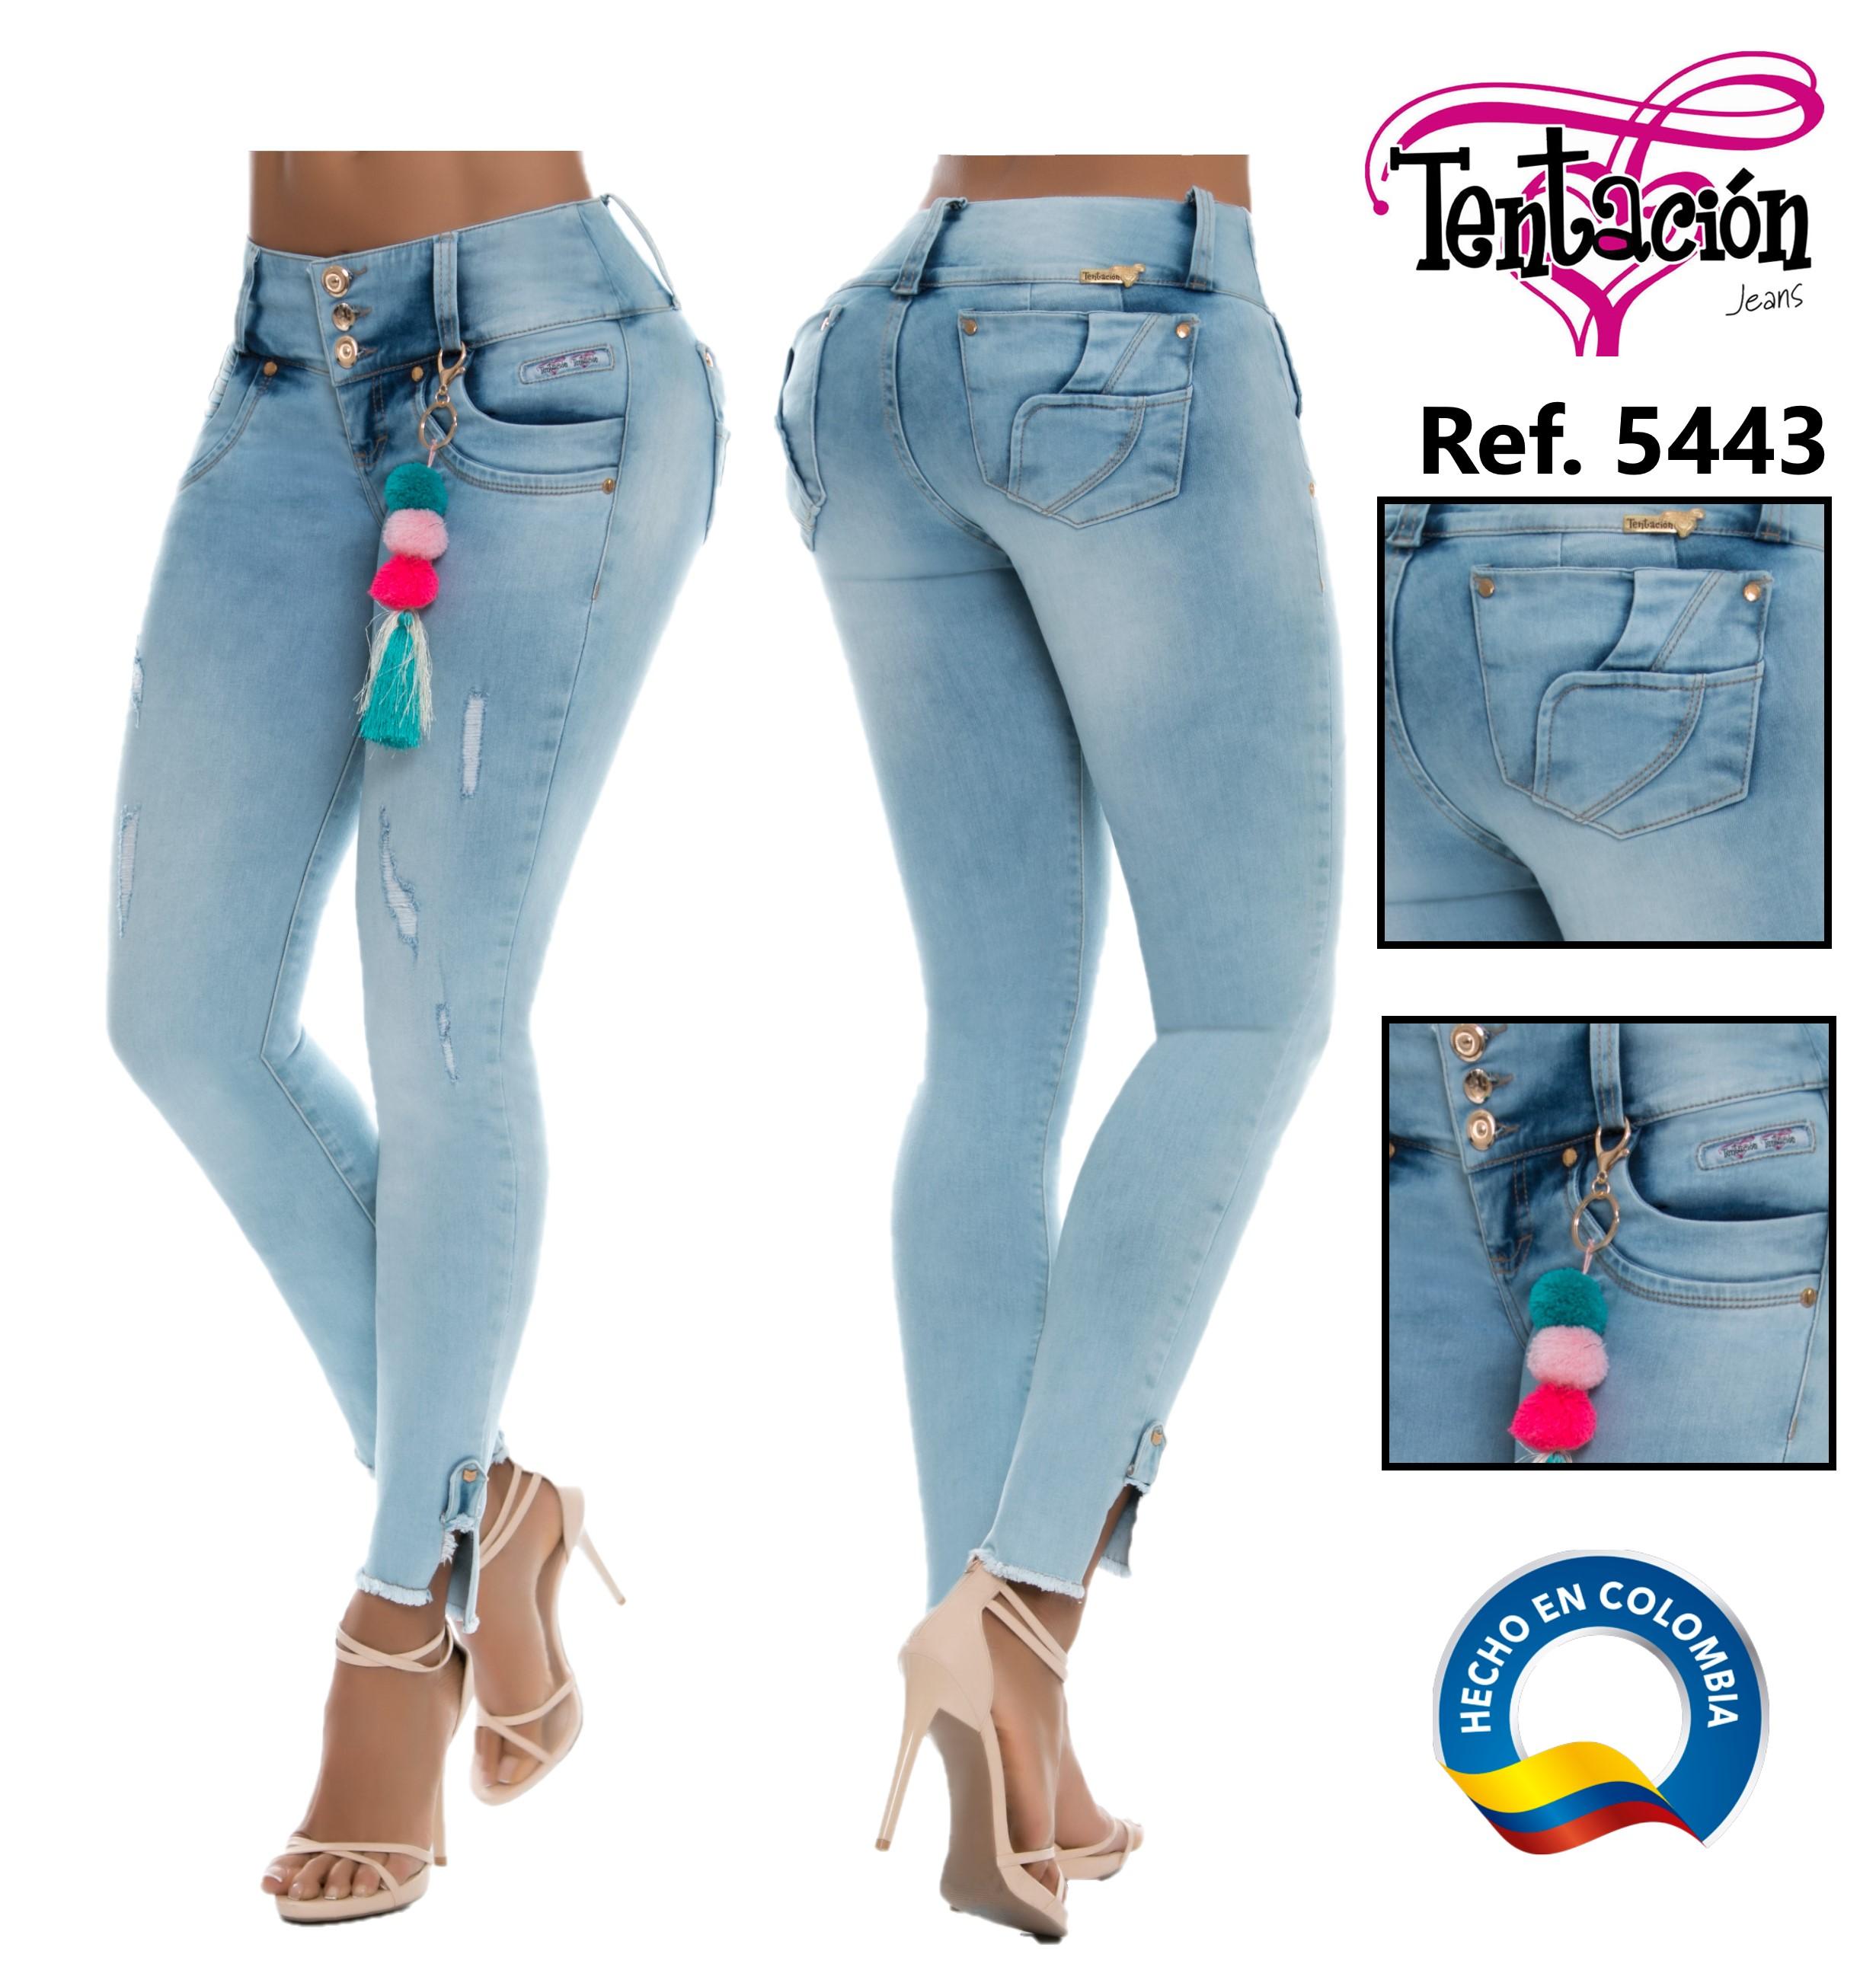 Fashionable Colombian Jean